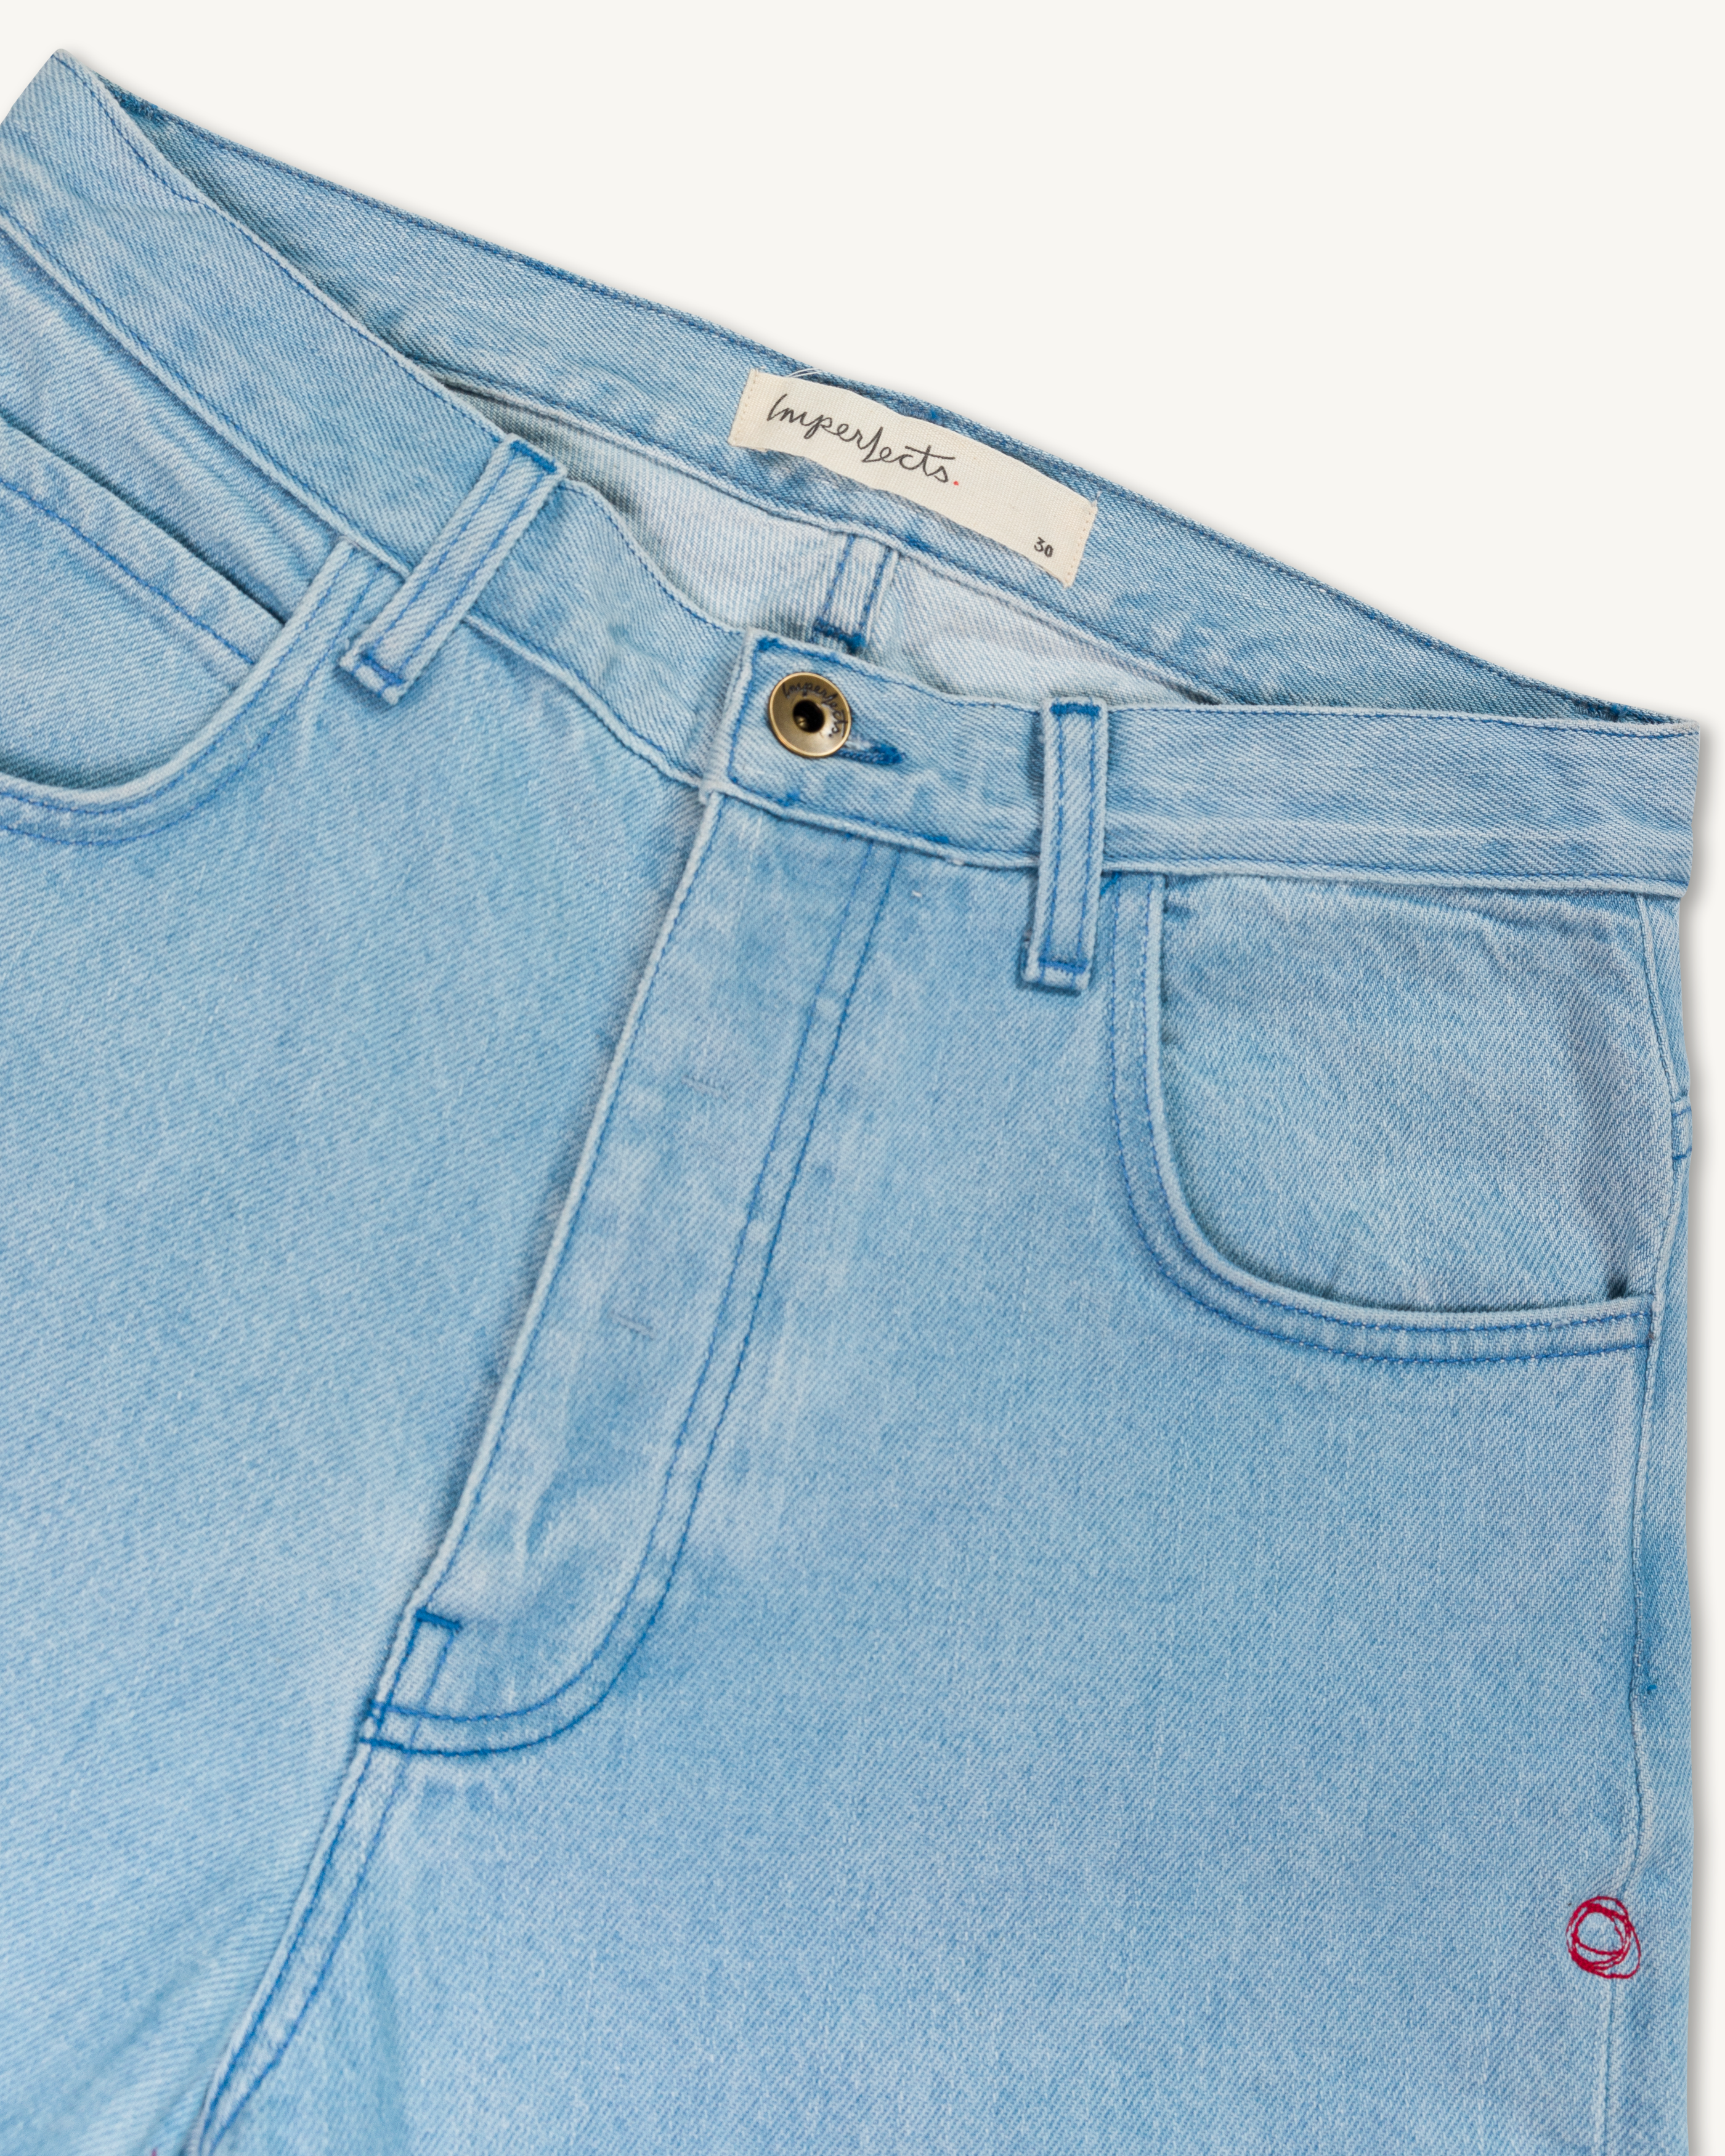 Loose High Waist Jeans - Light denim blue - Ladies | H&M IN